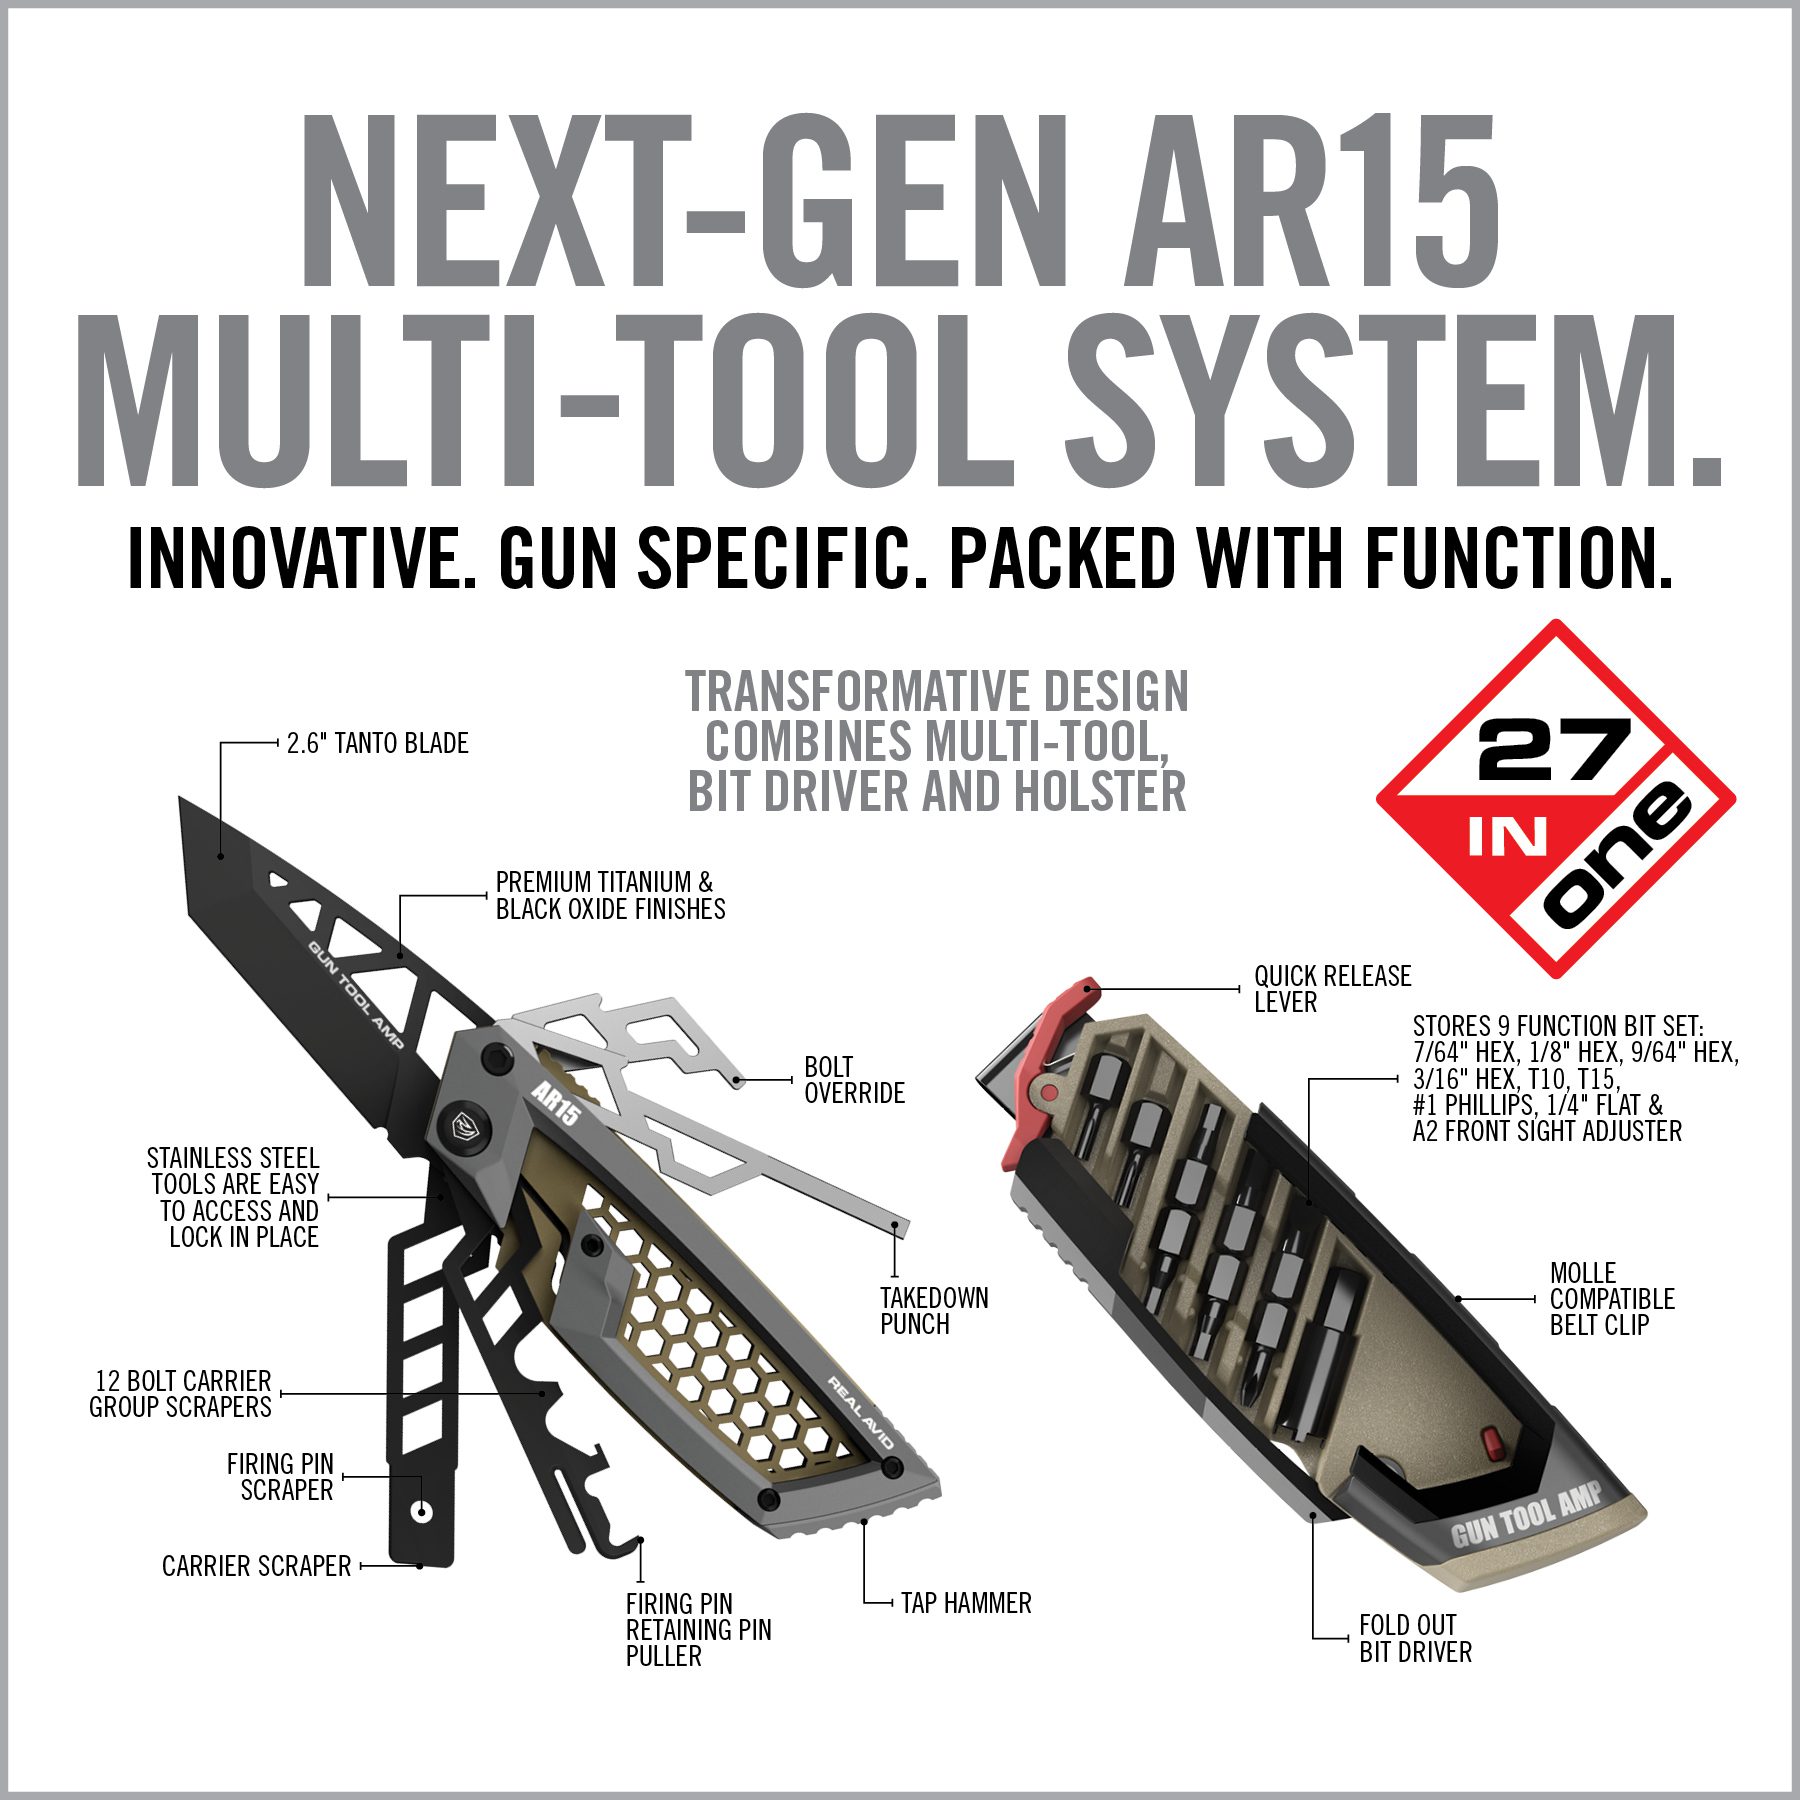 REAL AVID - Gun Tool Amp AR15